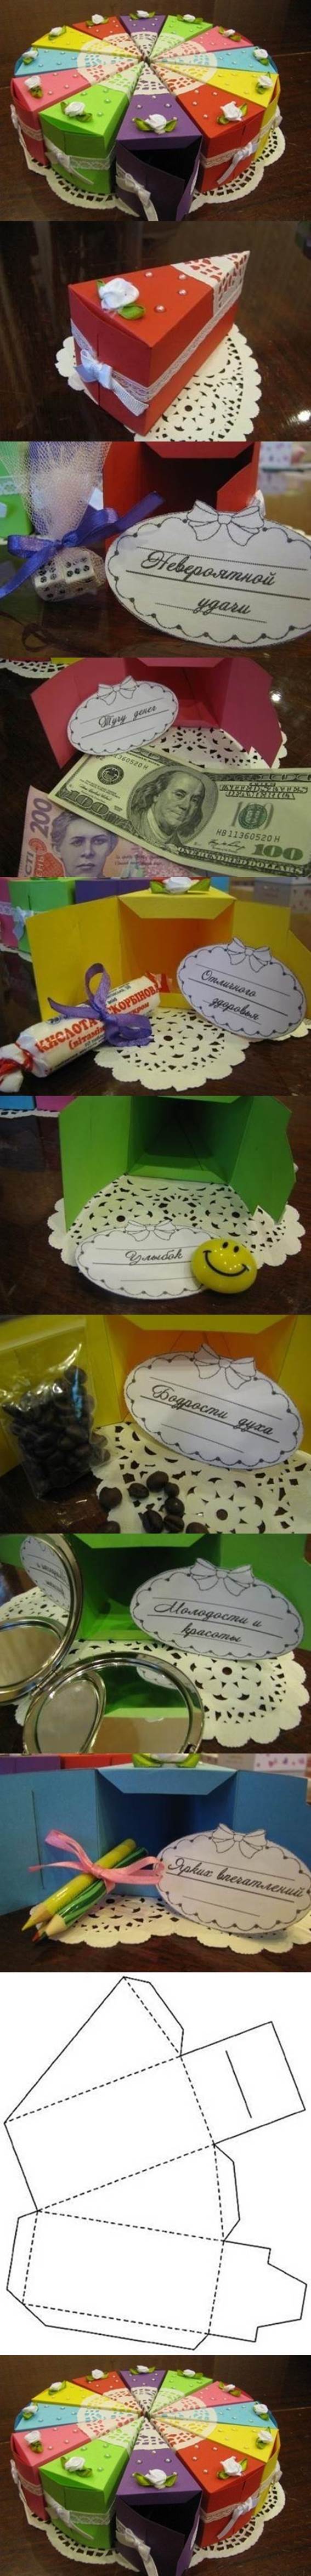 DIY Cake Shaped Gift Boxes